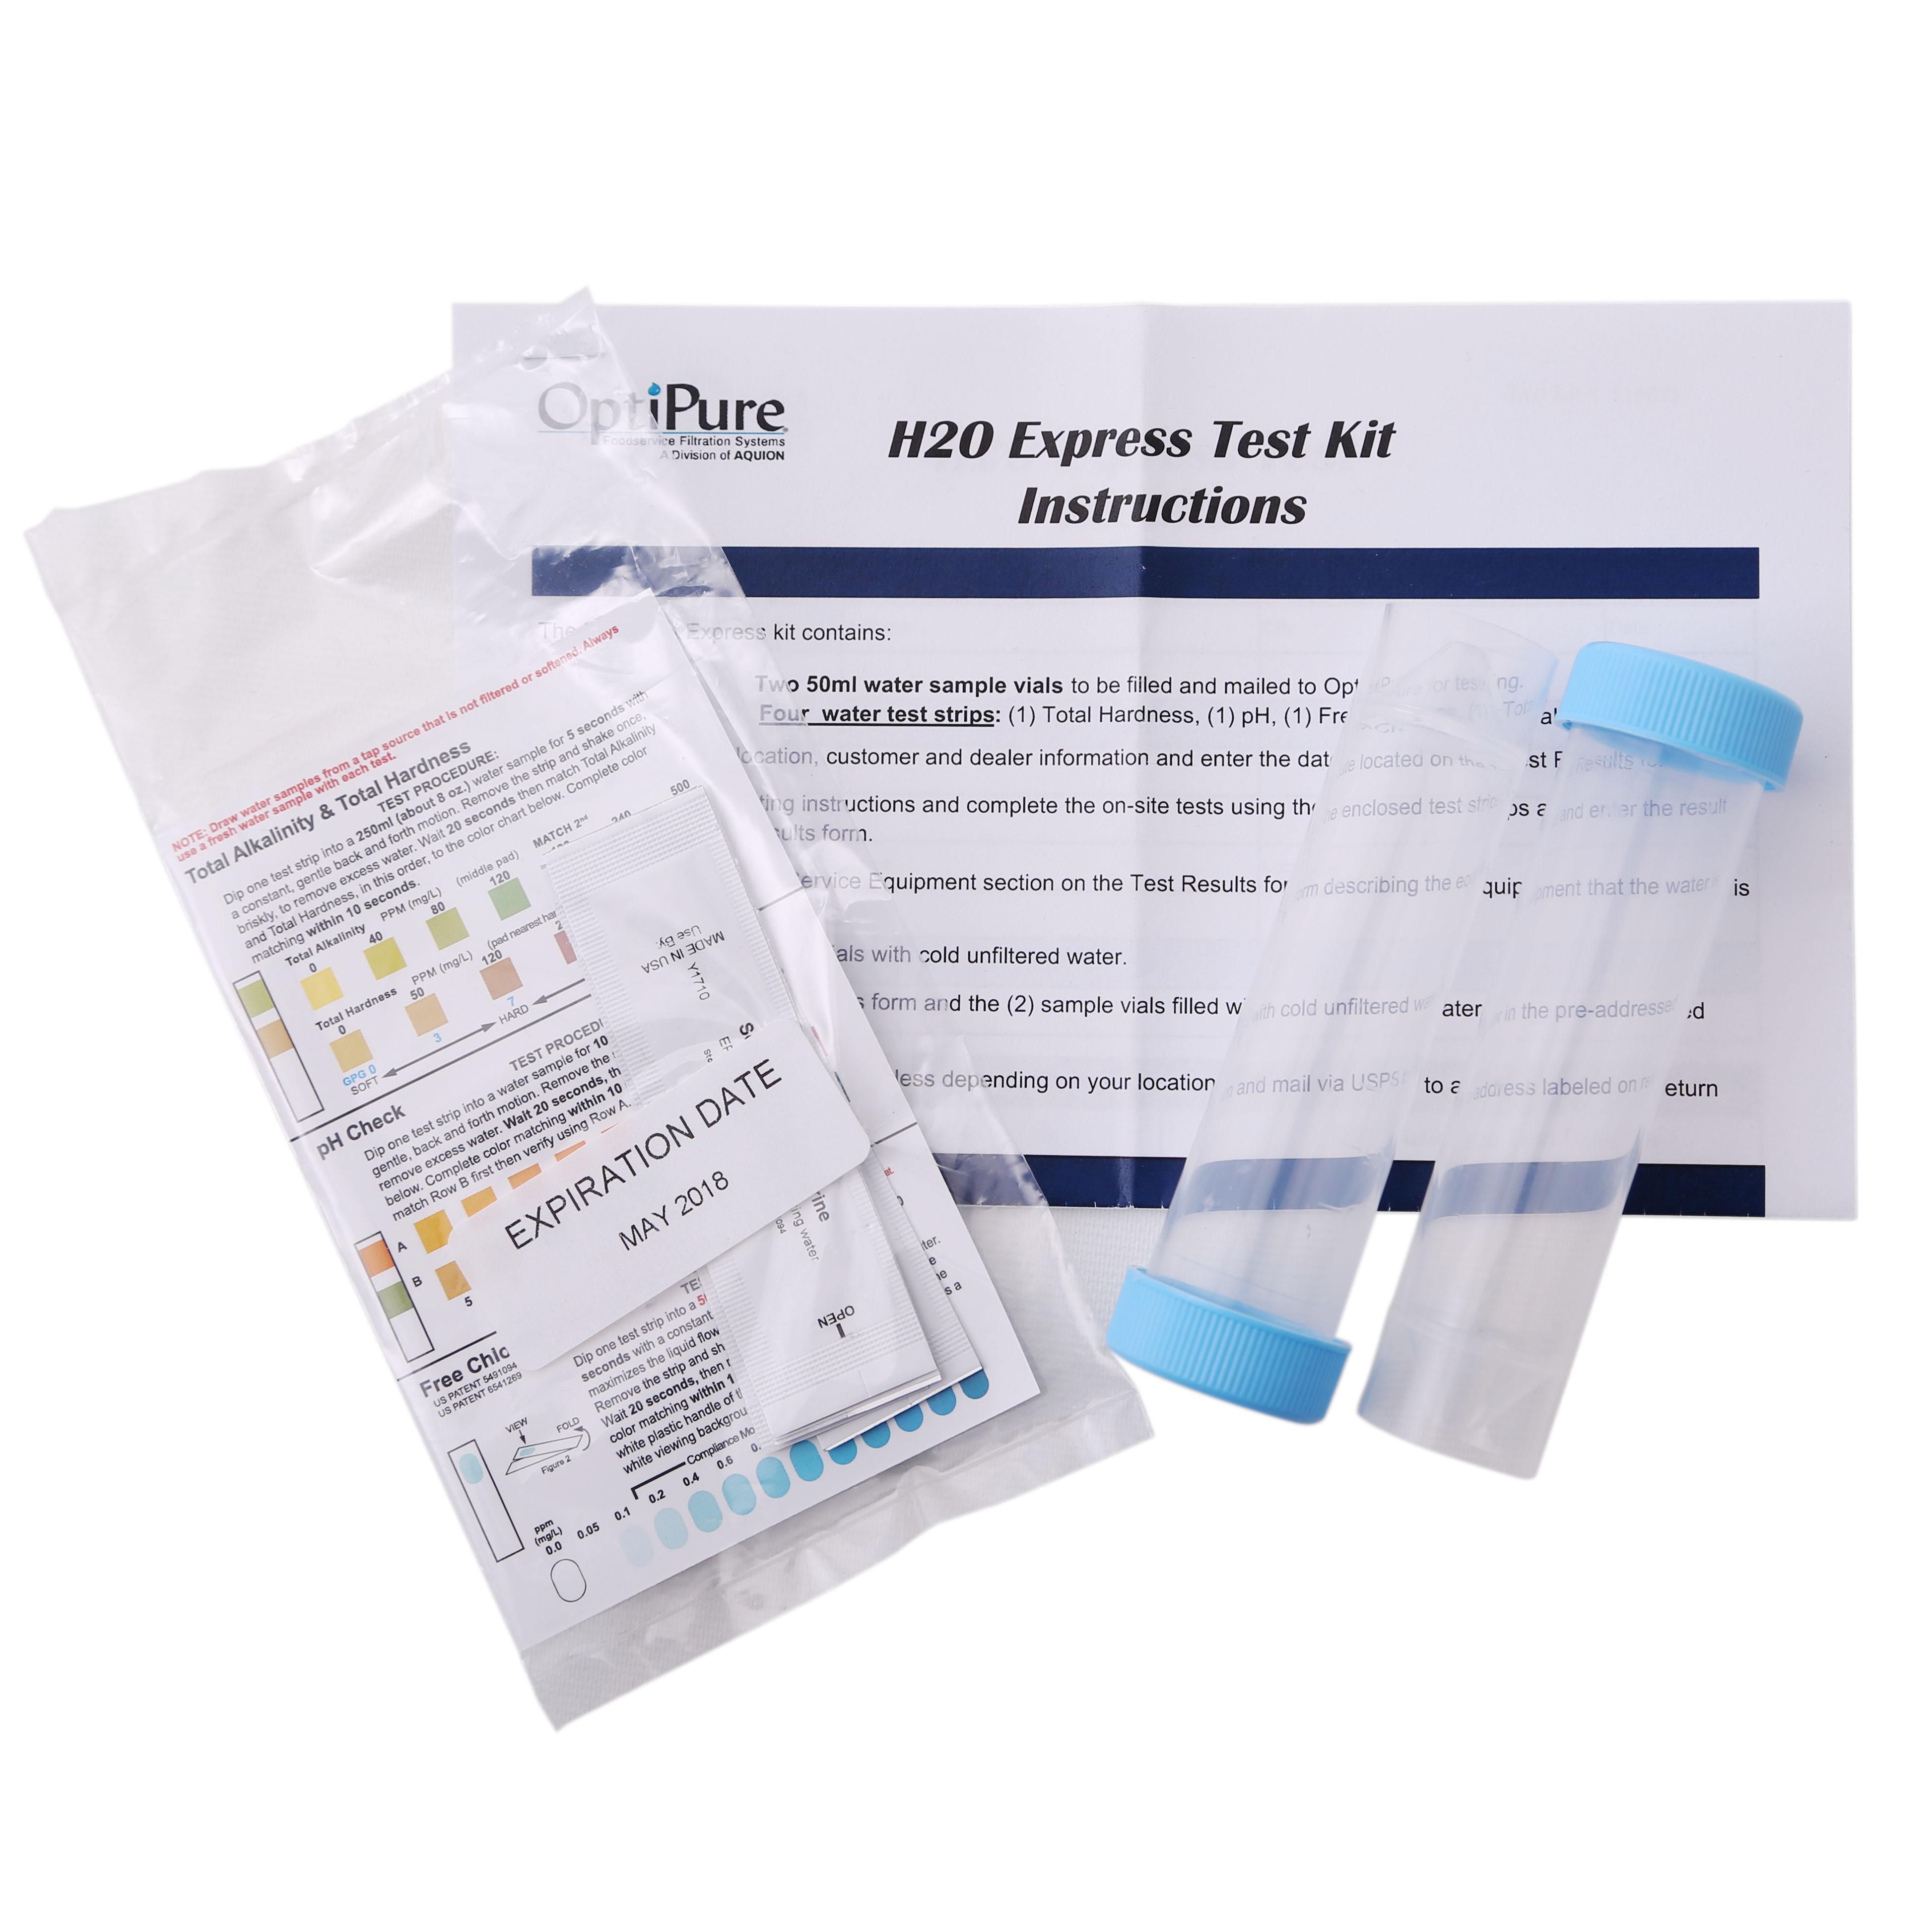 OptiPure Water Test Kit